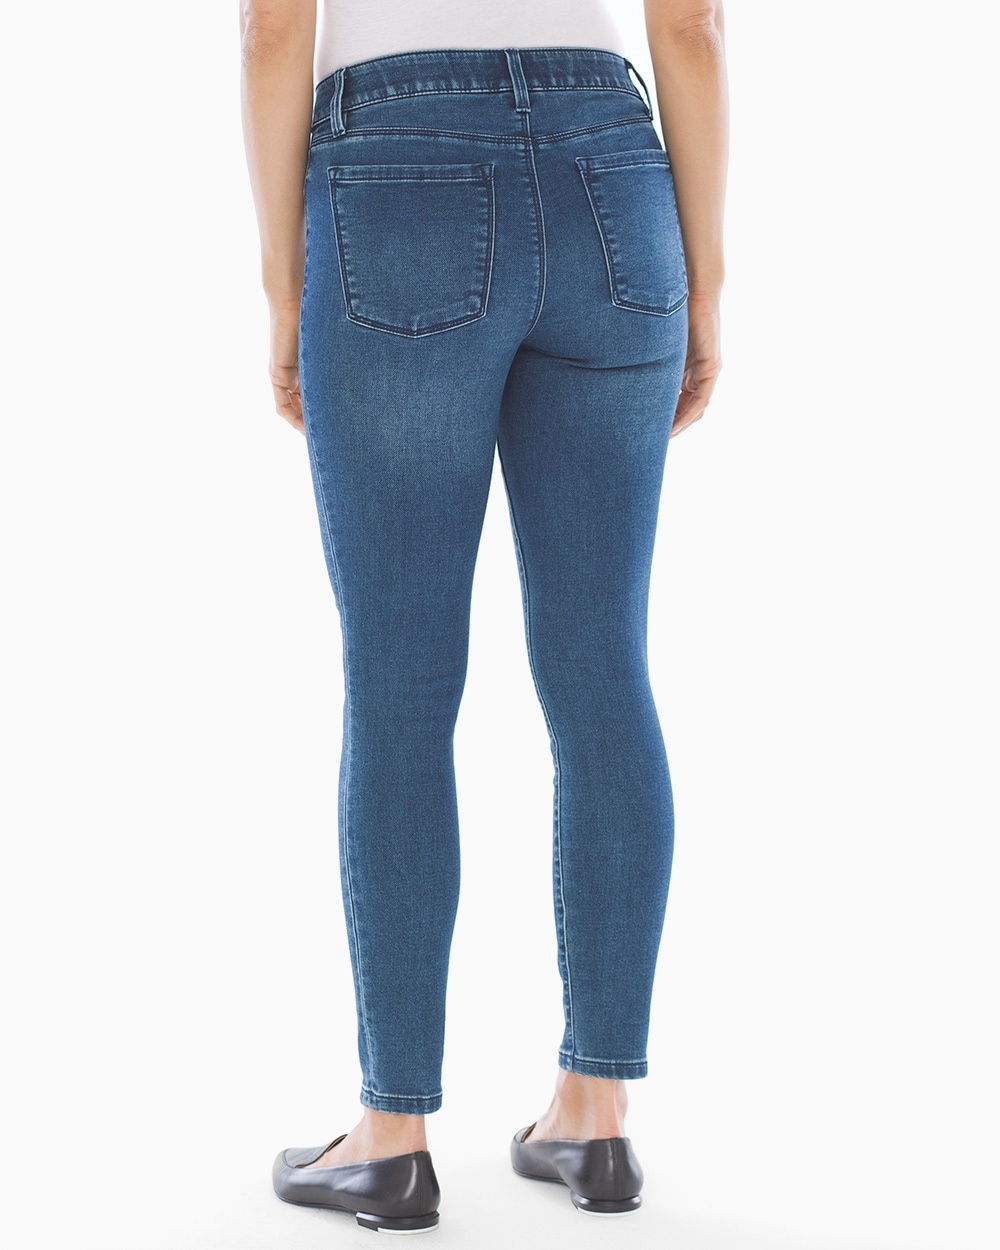 Style Essentials Soma 5 Jeans - Pocket Slimming Indigo RG